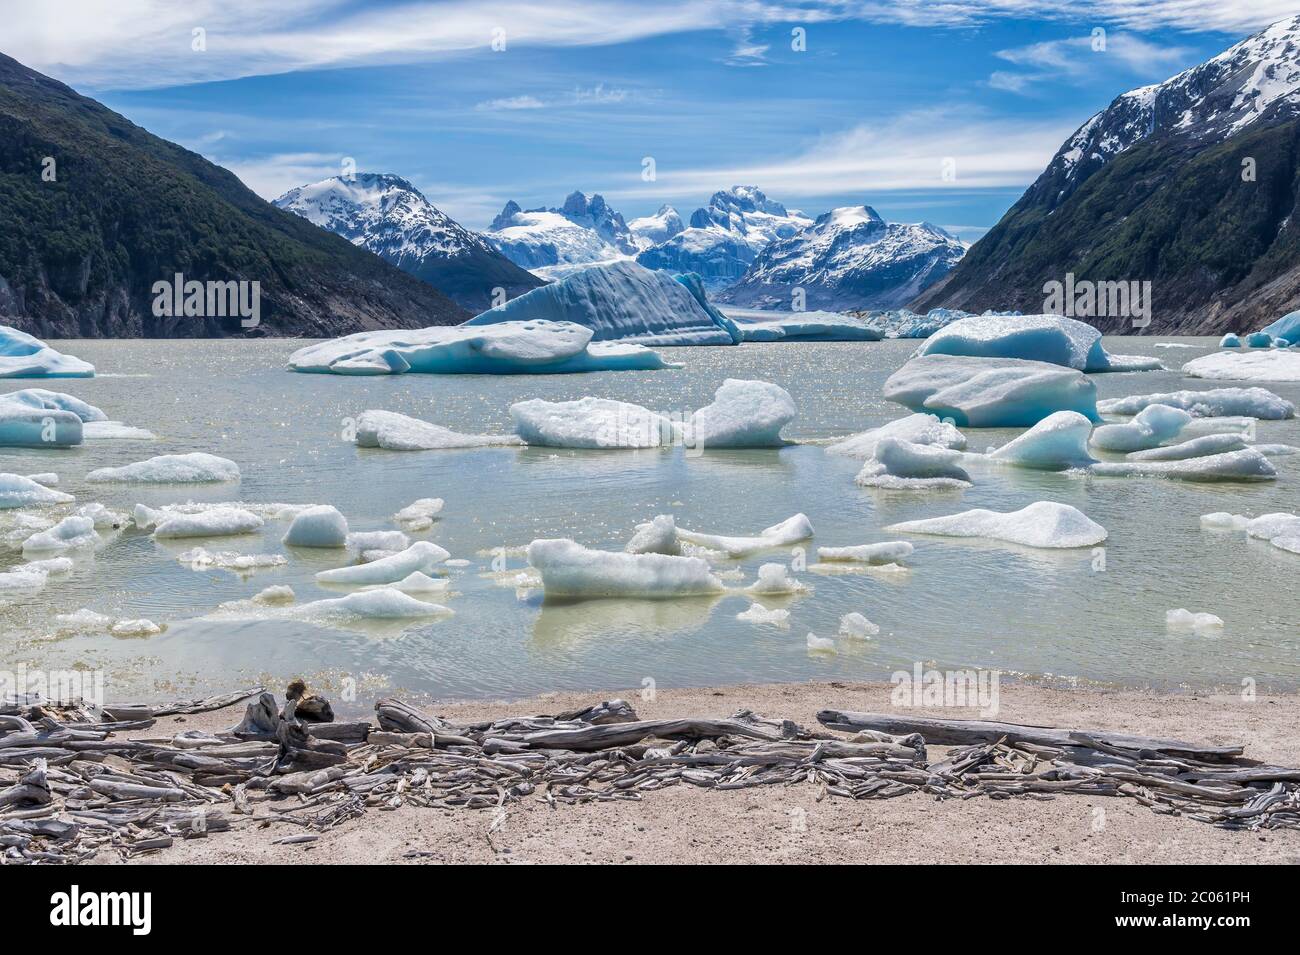 Glacial lake with small icebergs floating, Laguna San Rafael National Park, Aysen Region, Patagonia, Chile Stock Photo